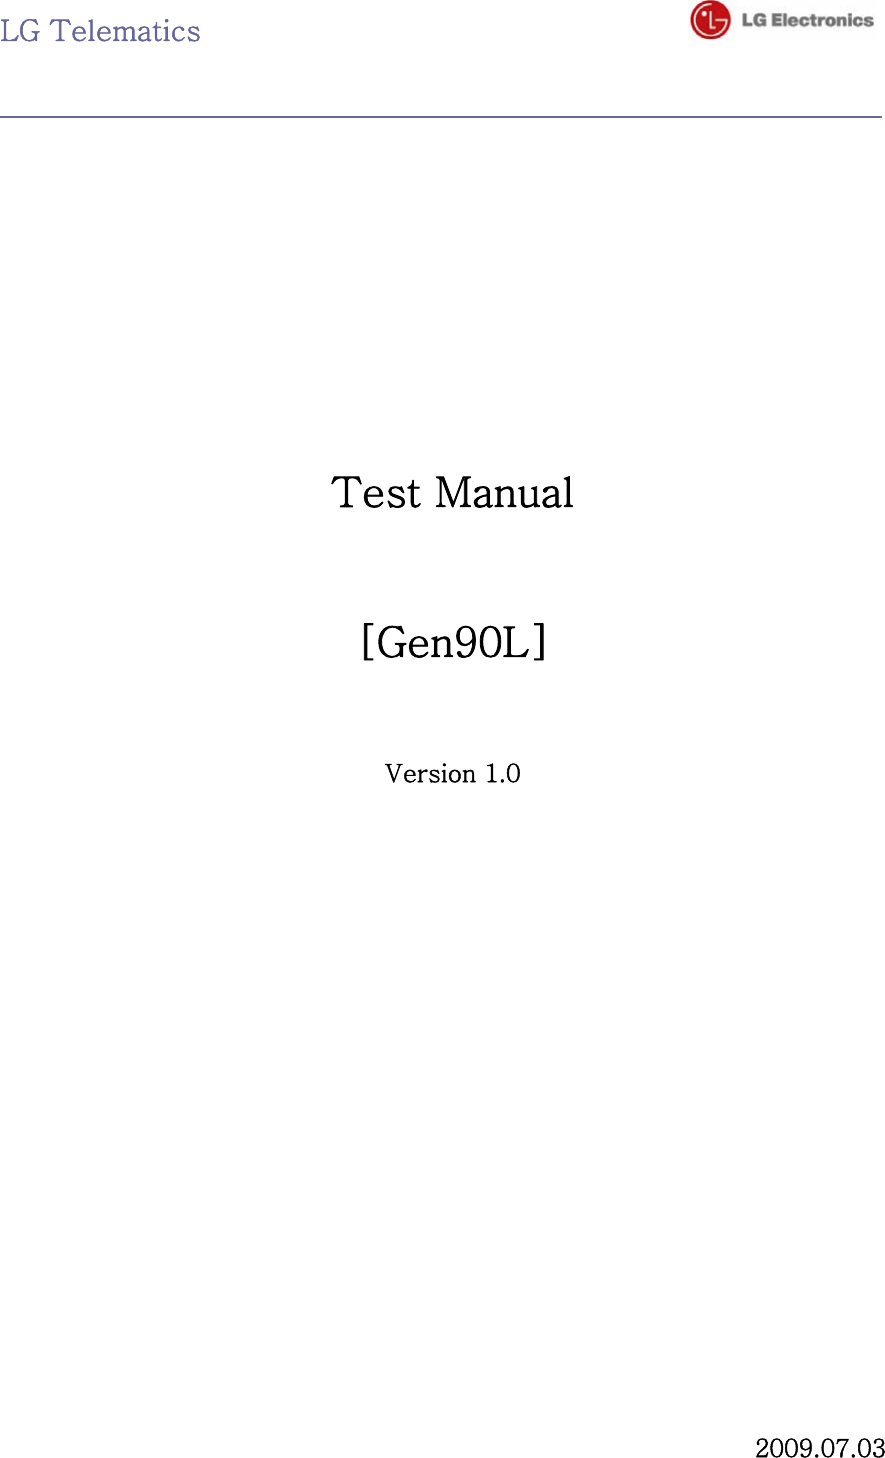 LG Telematics                                             Test Manual  [Gen90L]   Version 1.0                  2009.07.03 